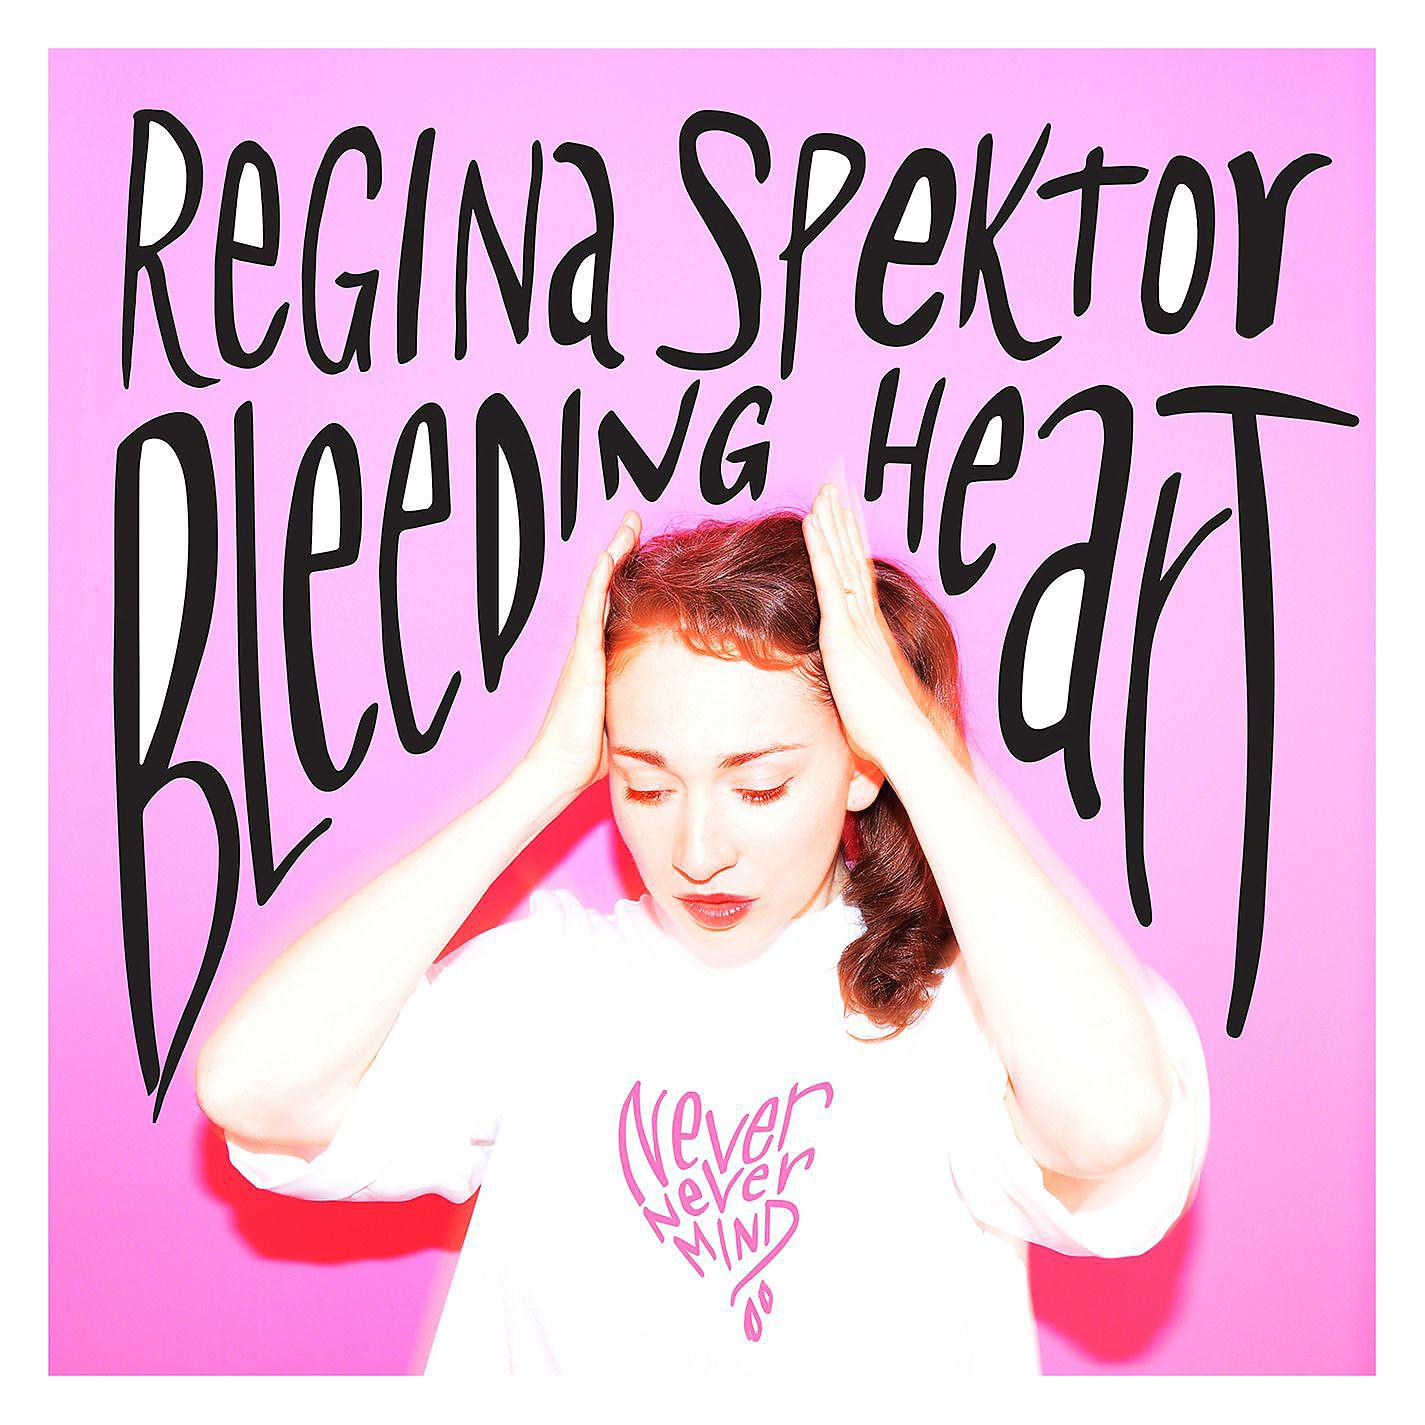 Постер альбома Bleeding Heart